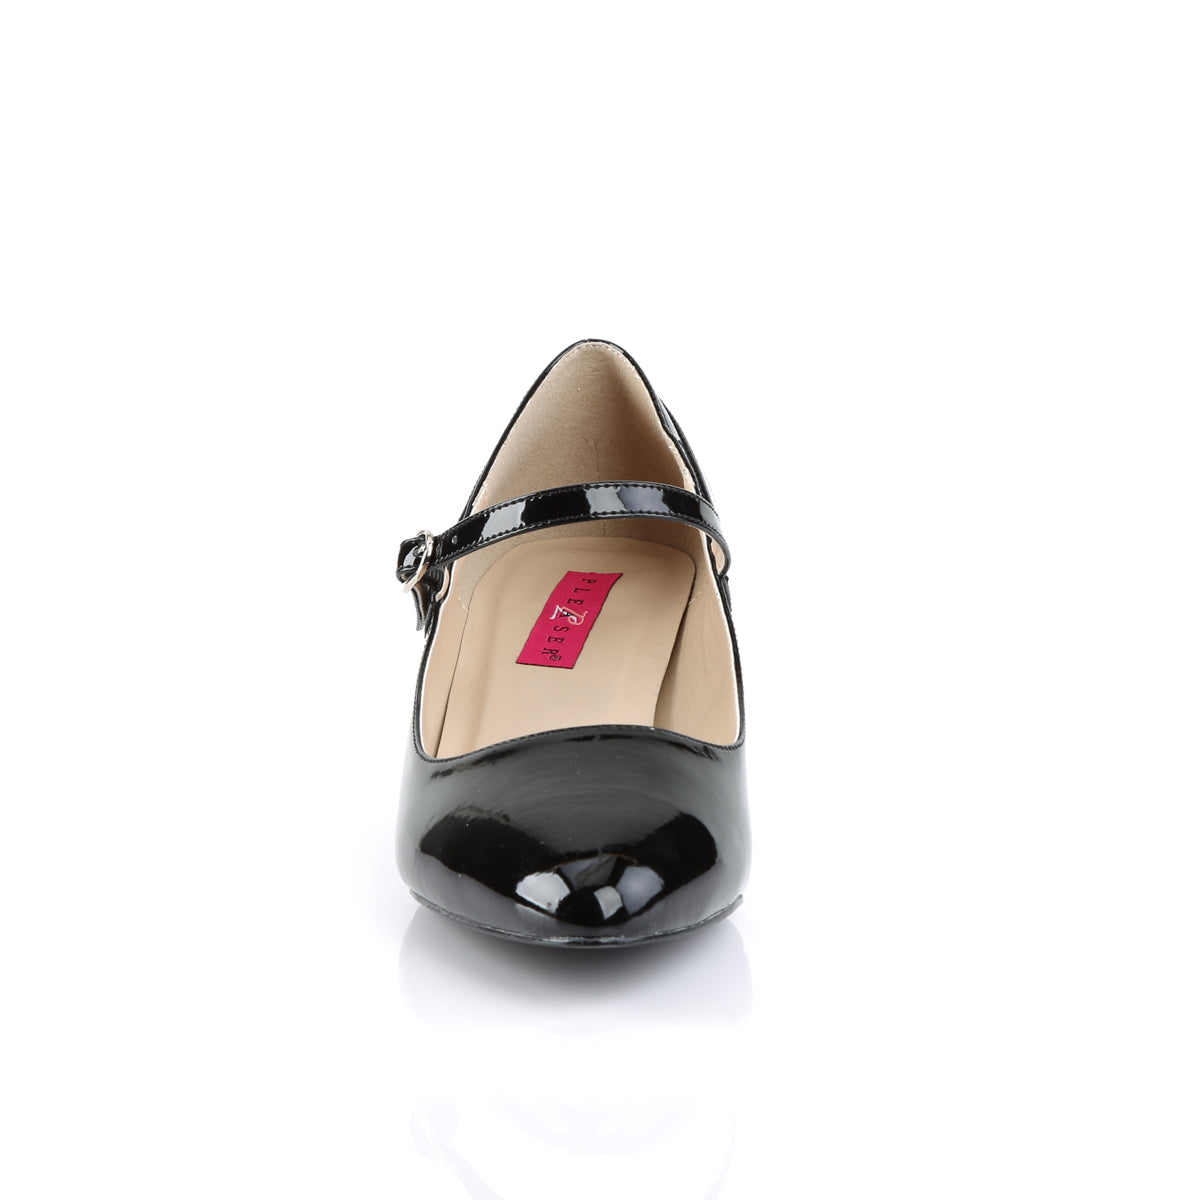 FAB-425 Pink Label 2" Heel Black Patent Fetish Footwear-Pleaser Pink Label- Drag Queen Shoes